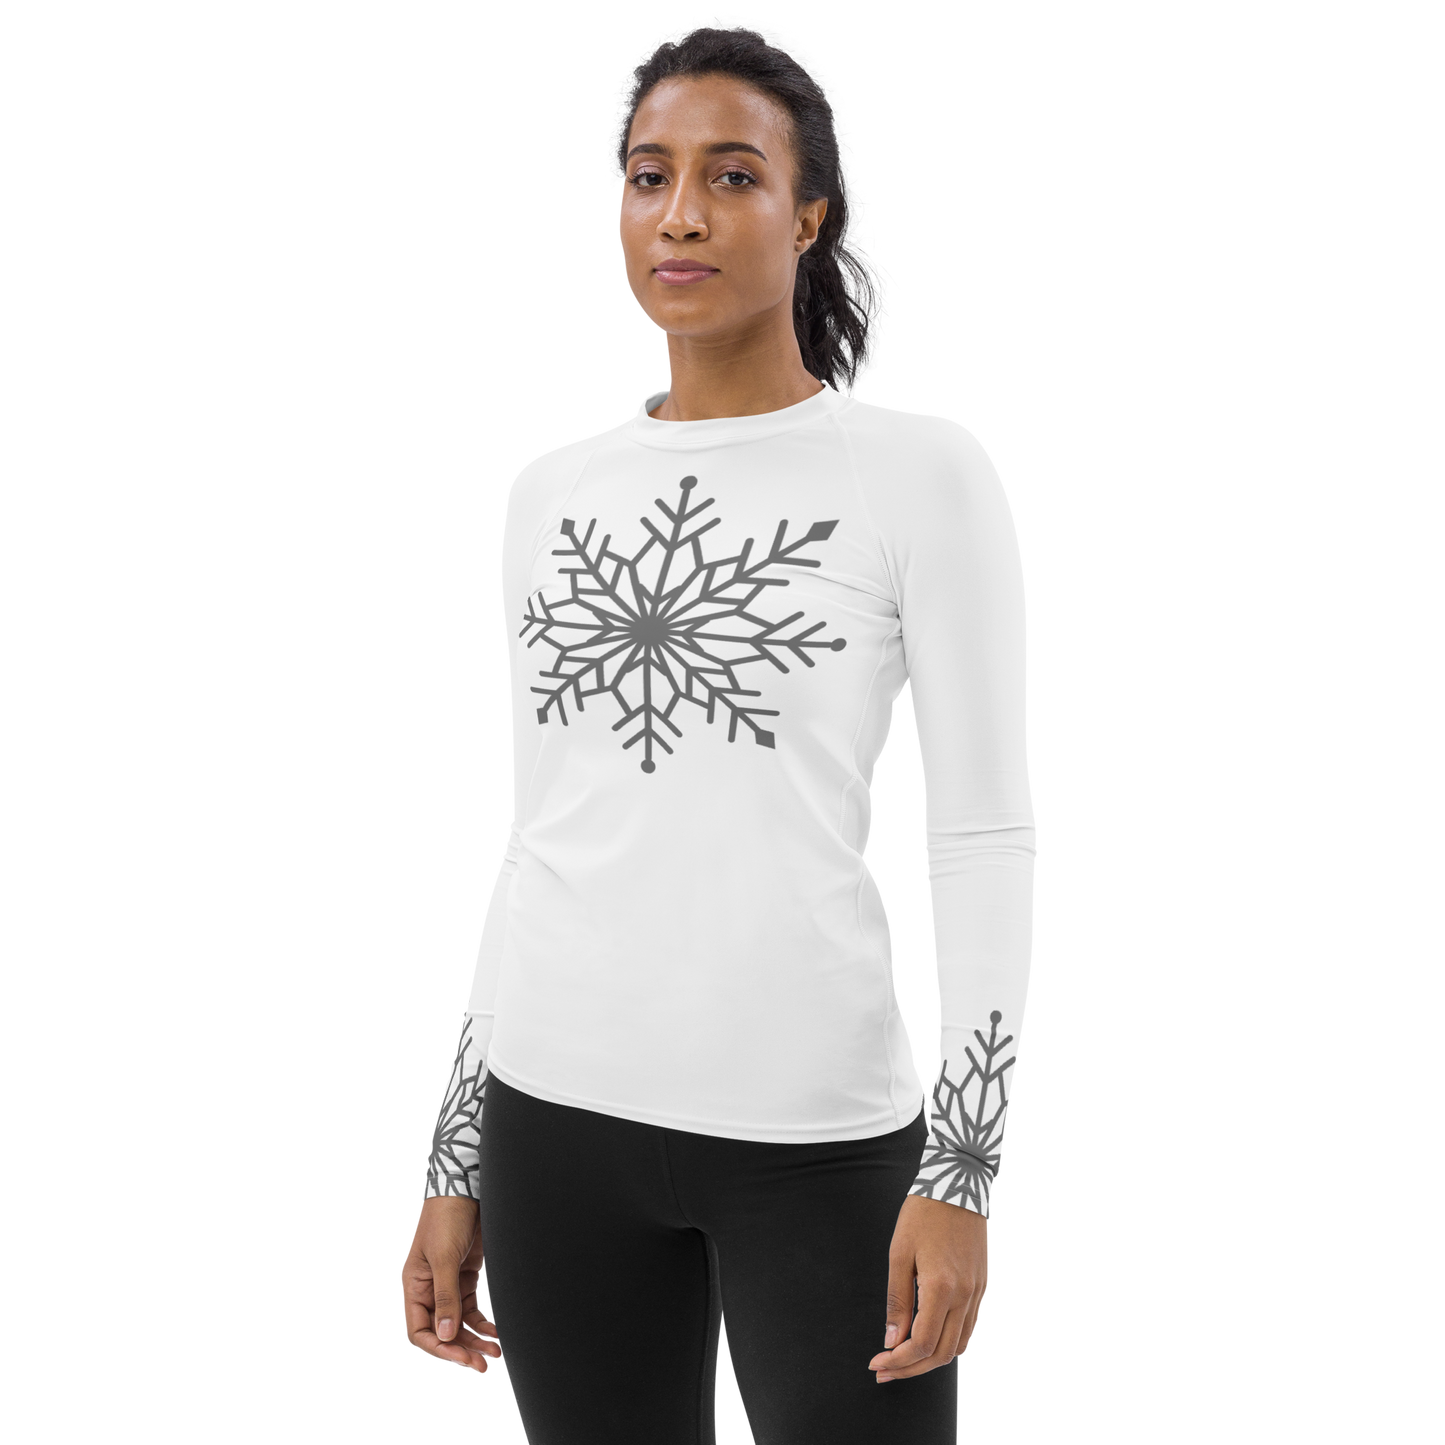 Winter Snowflake Top, Graphite Gray Snowflake on White Women's Rash Guard, Holiday Top